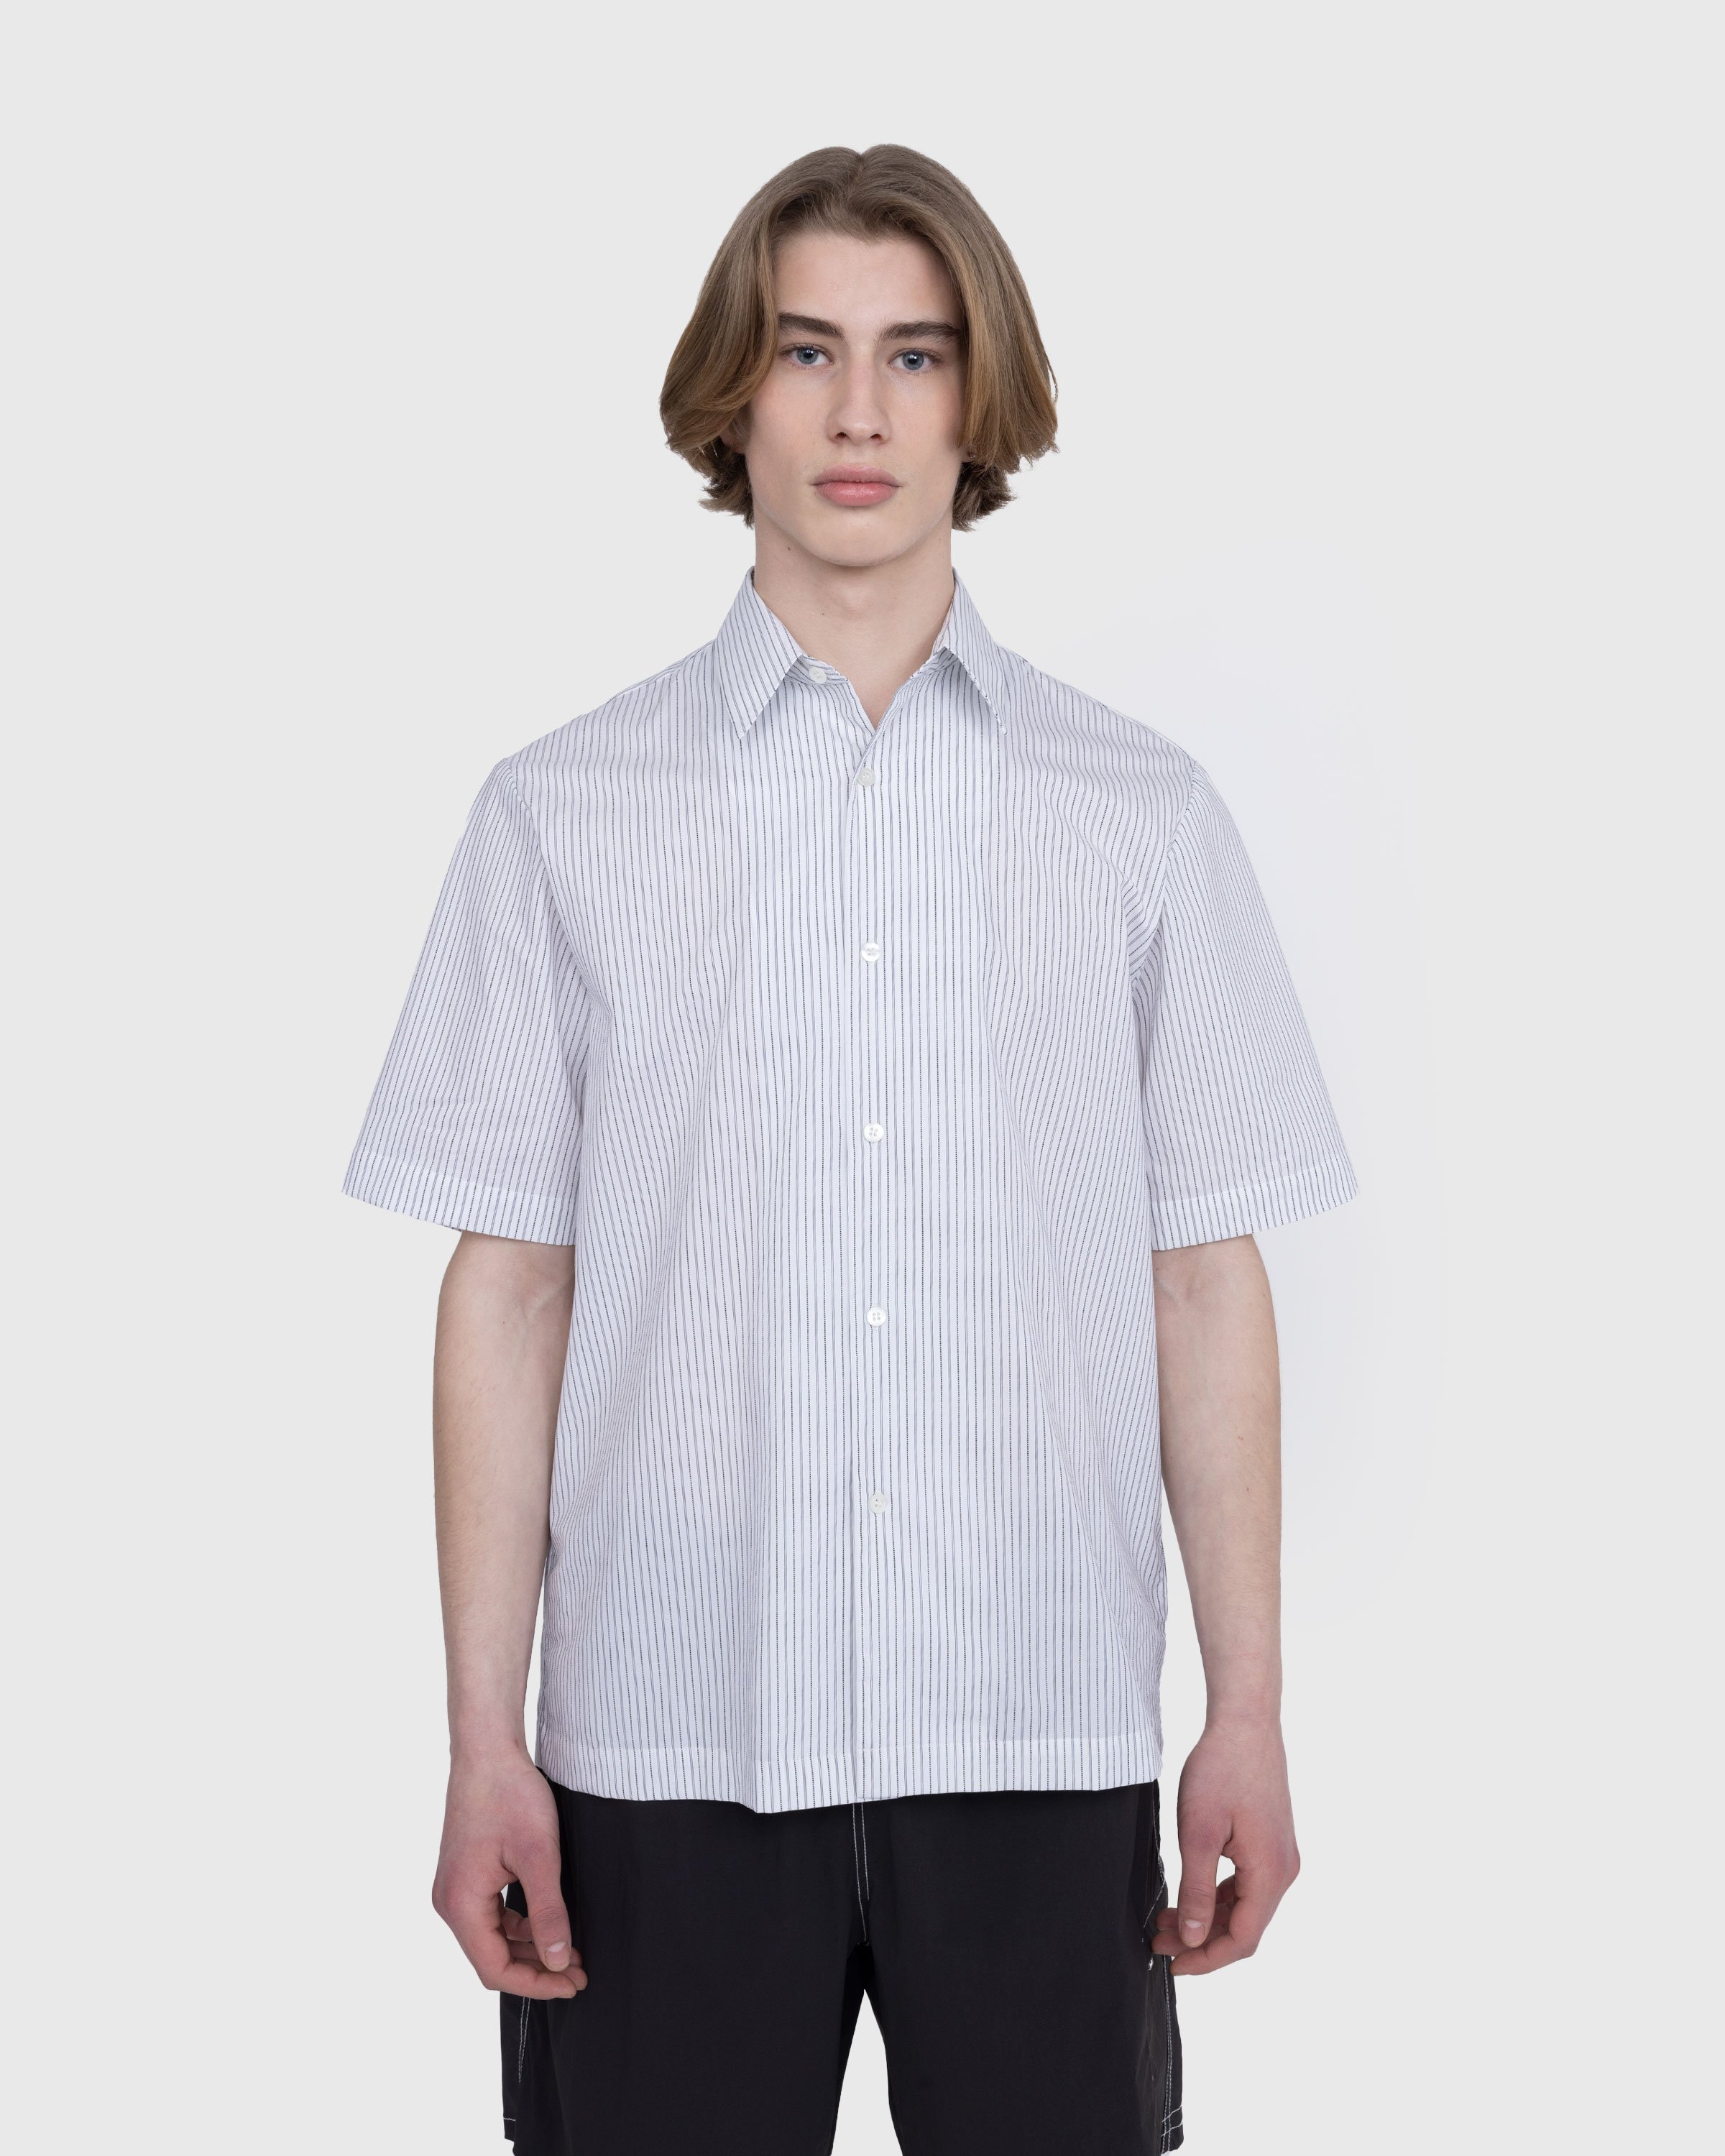 Dries van Noten - Clasen Shirt White - Clothing - White - Image 2